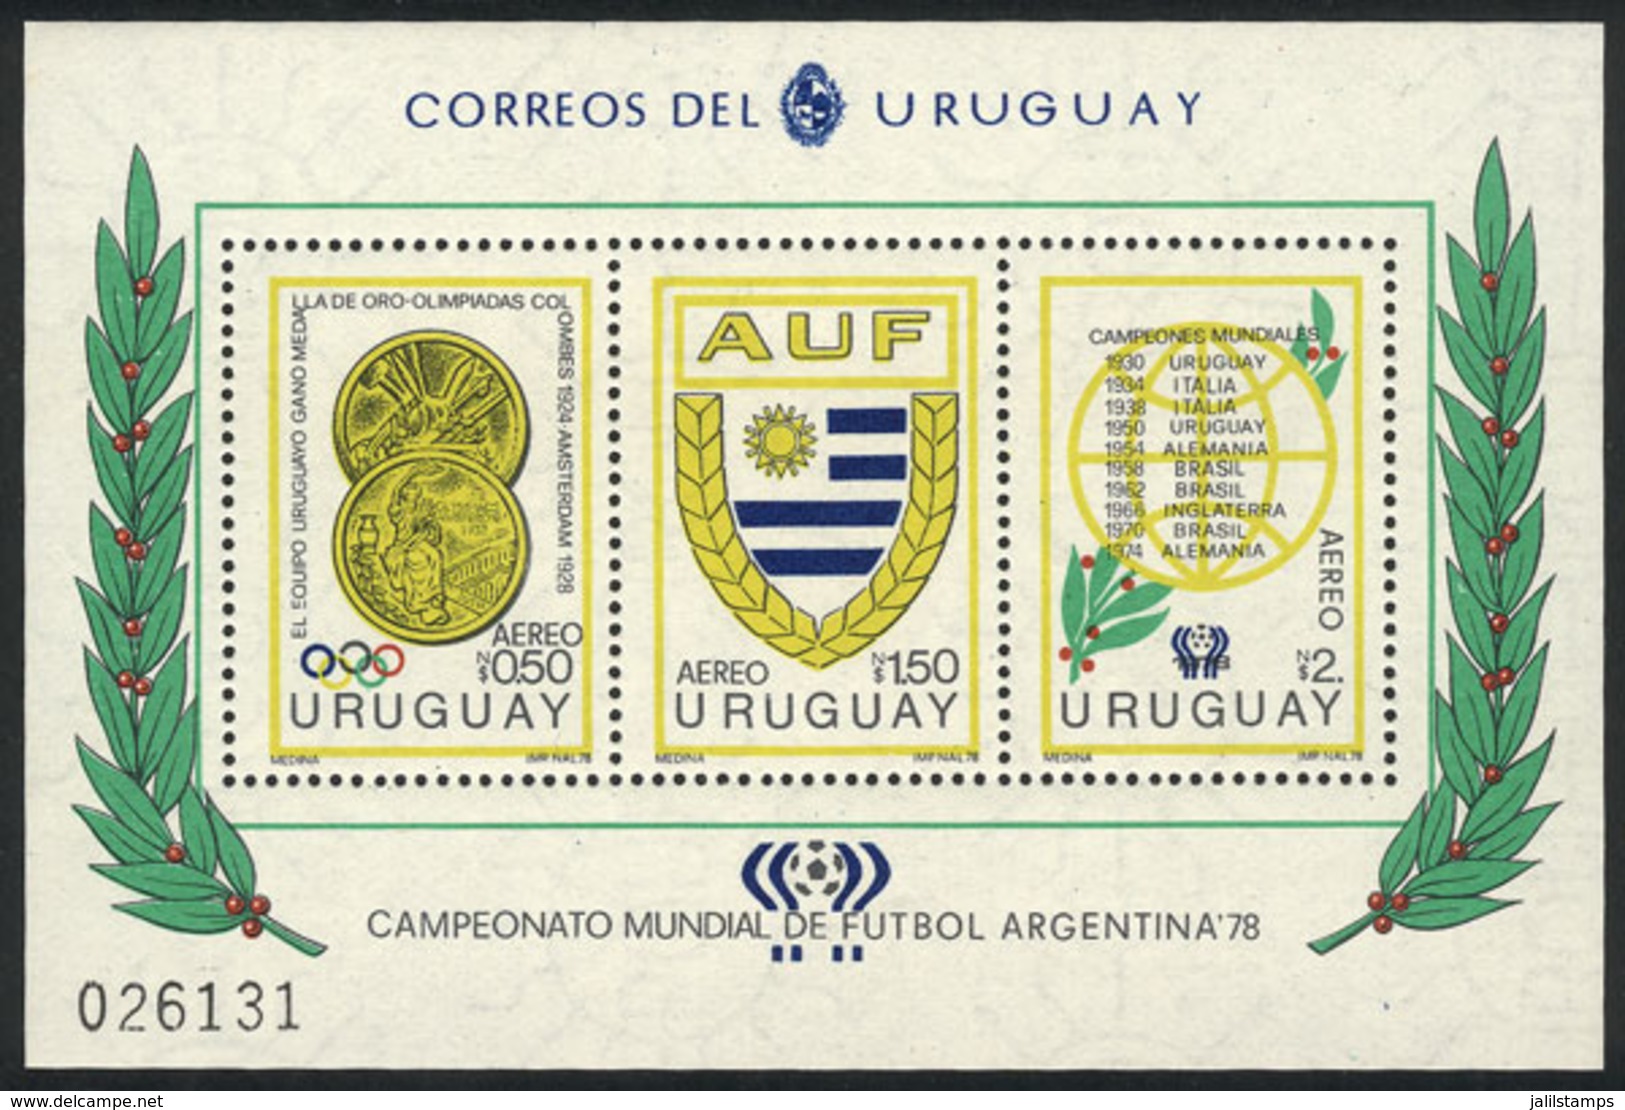 URUGUAY: Sc.C434, 1978 Football World Cup, MNH, Excellent Quality, Catalog Value US$55. - Uruguay